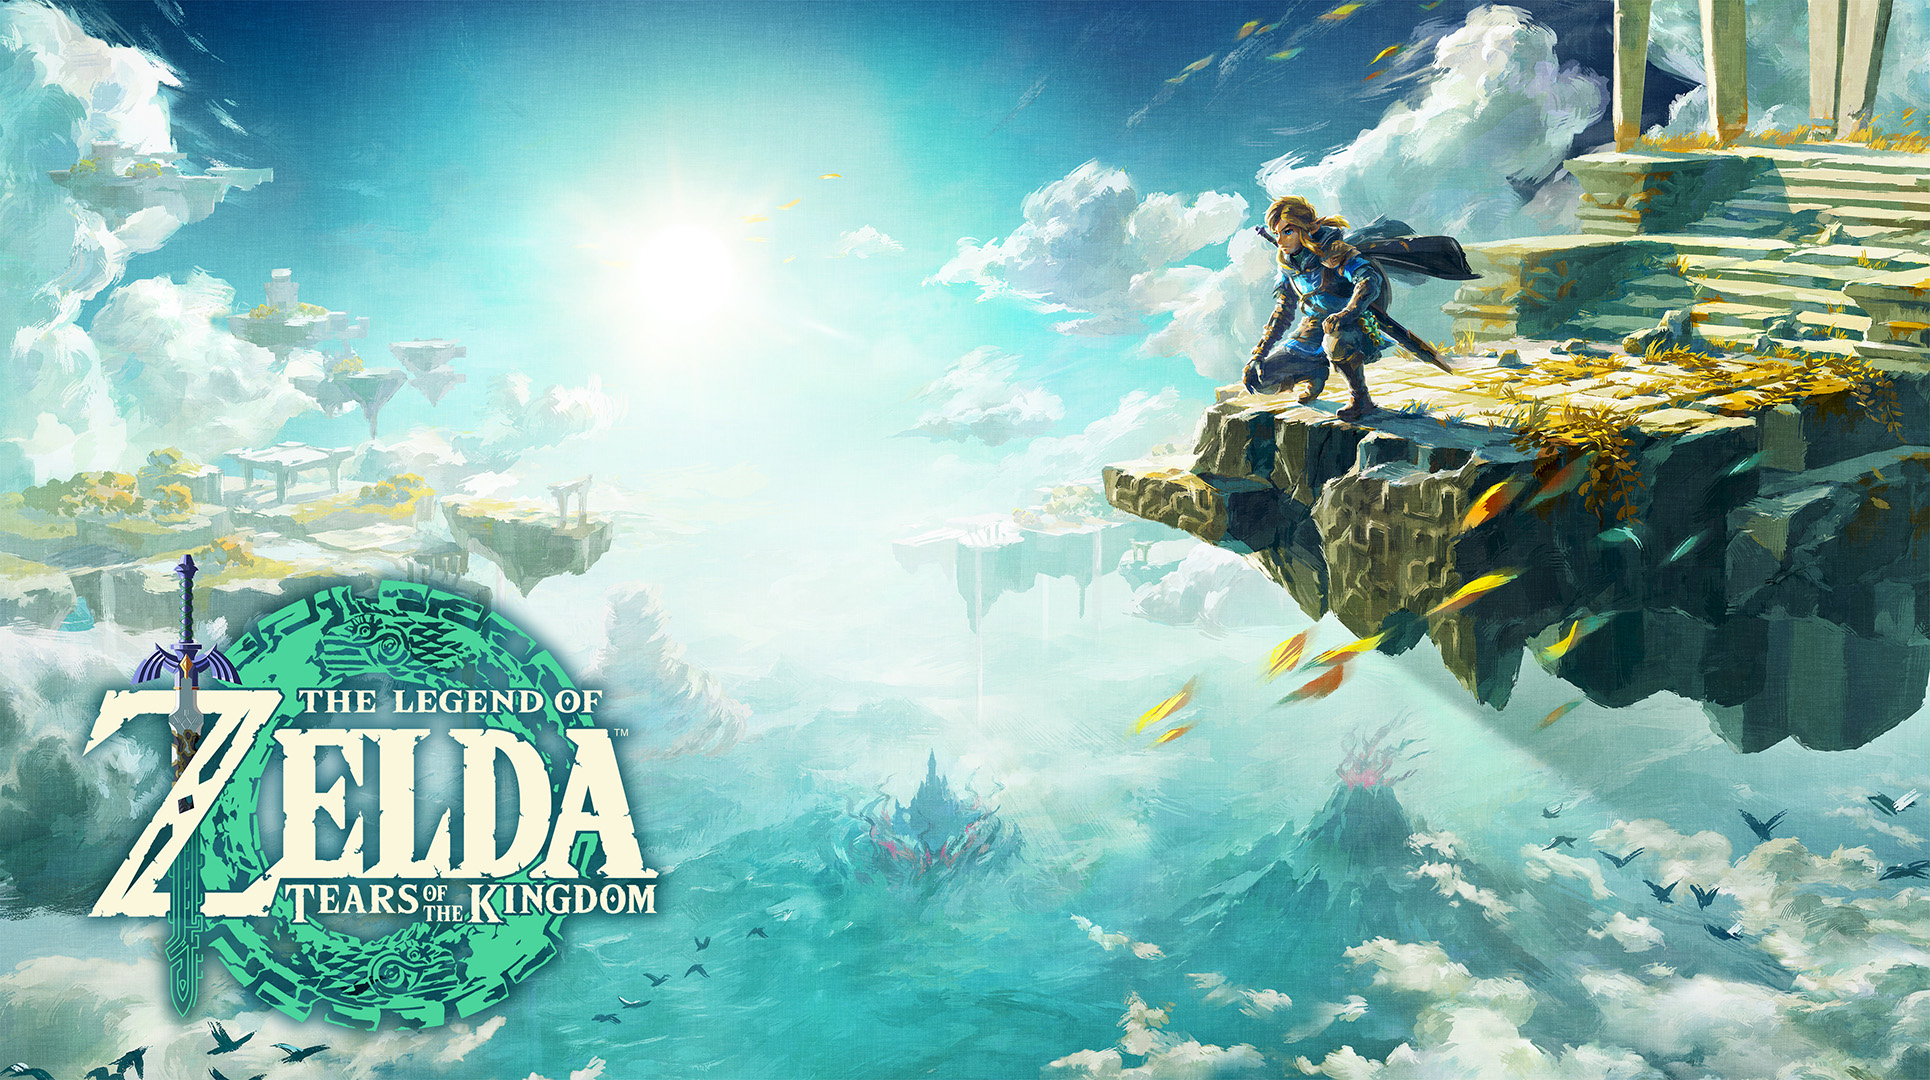 The key art for The Legend of Zelda: Tears of the Kingdom.